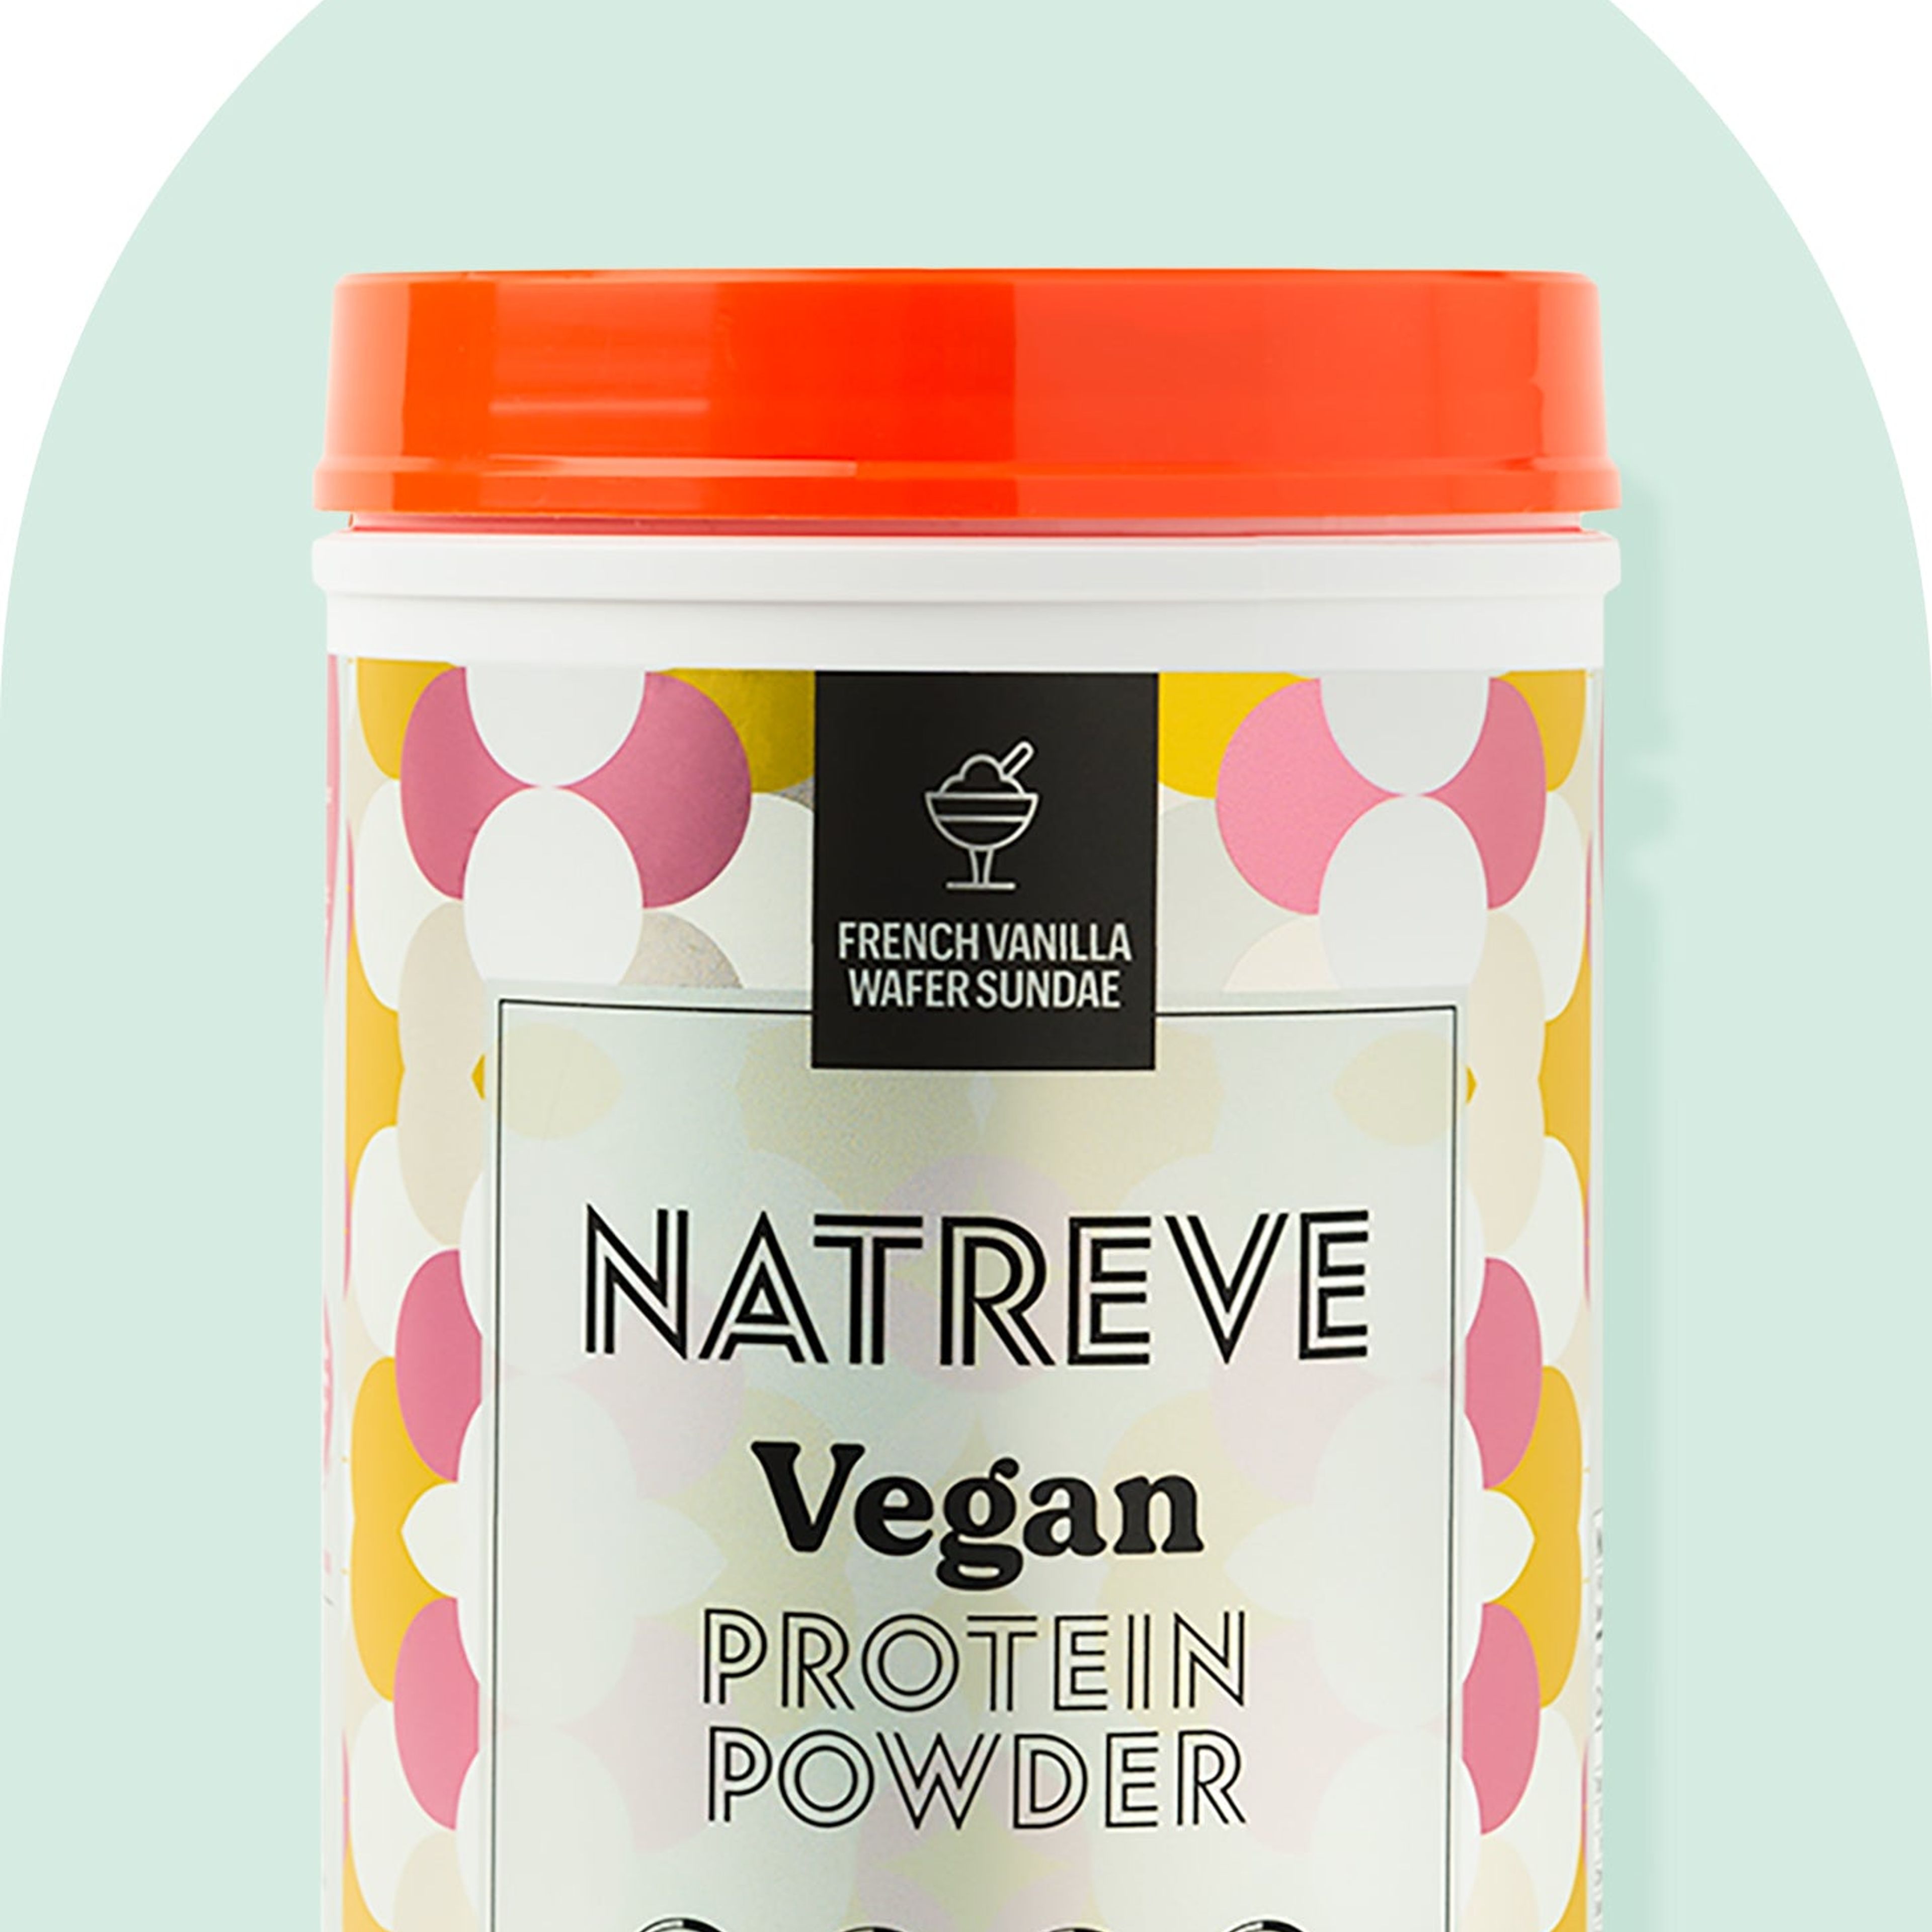 www.natreve.com/products/vegan-french-vanilla